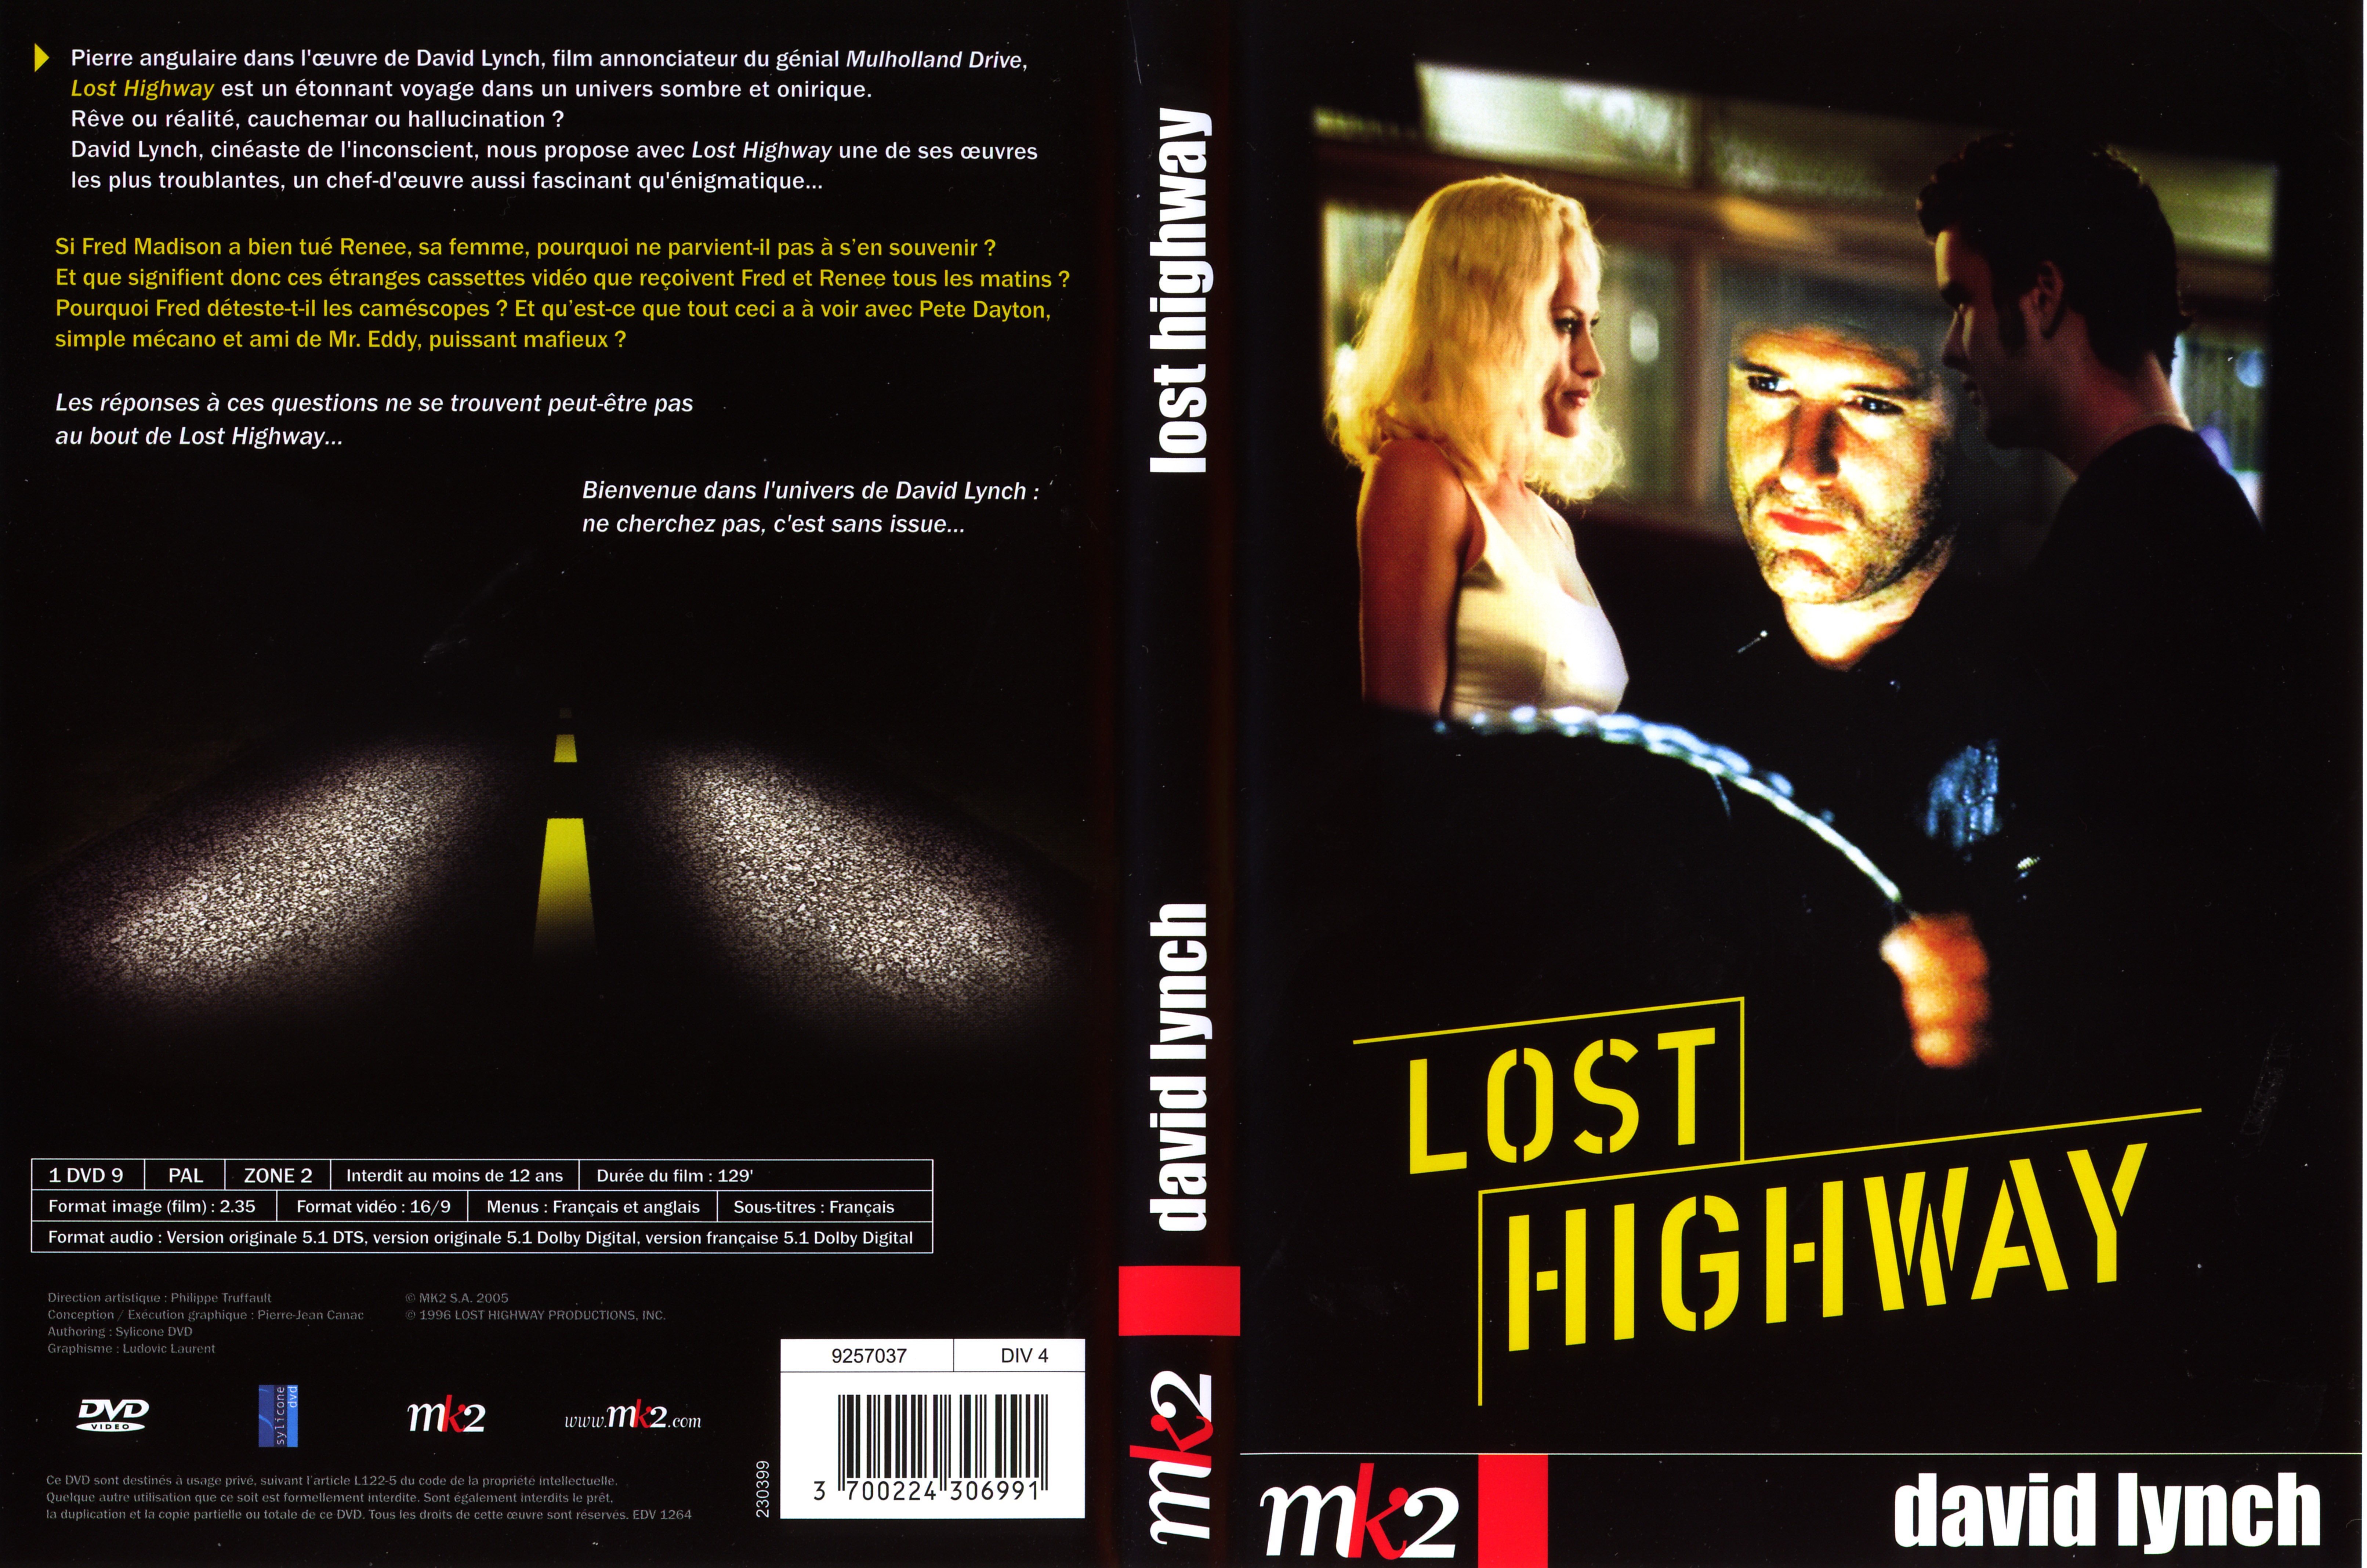 Jaquette DVD Lost highway